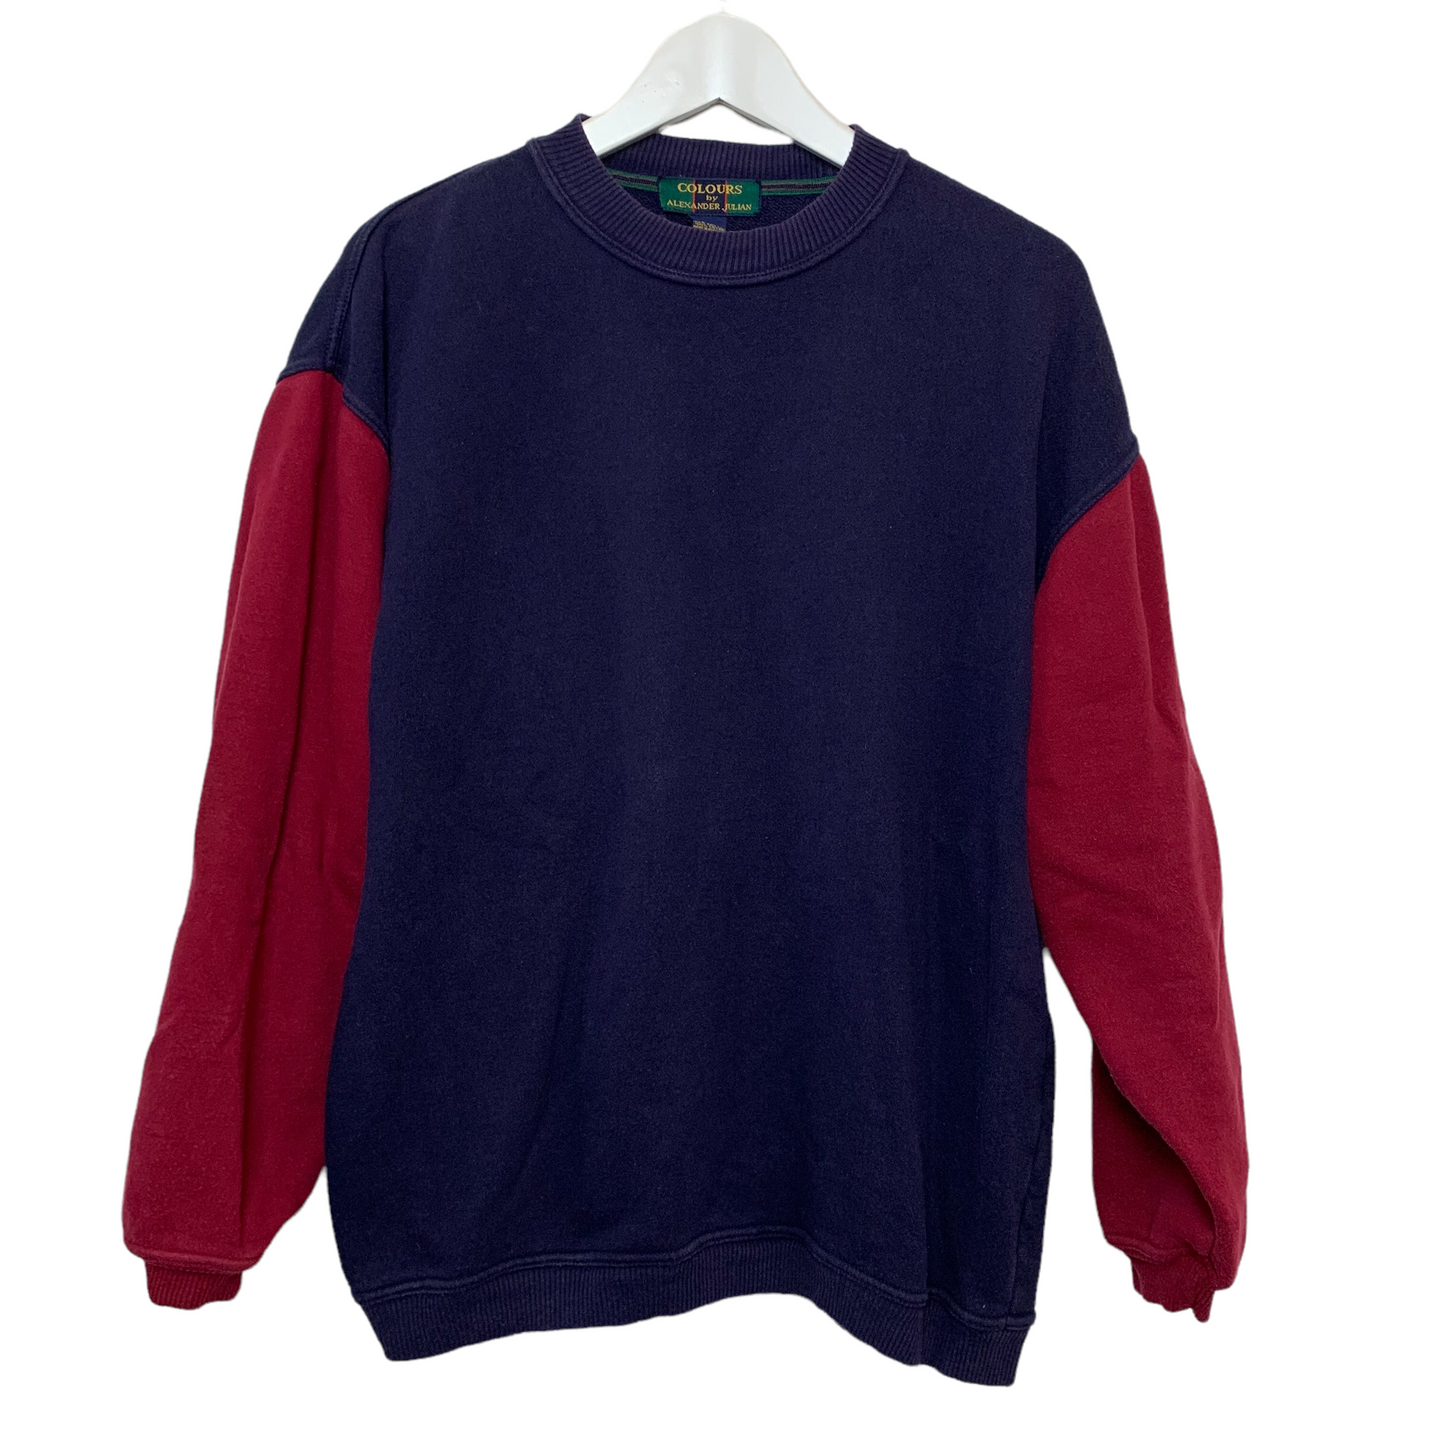 Vintage 90s Color Block Navy Blue and Red Crewneck Sweatshirt